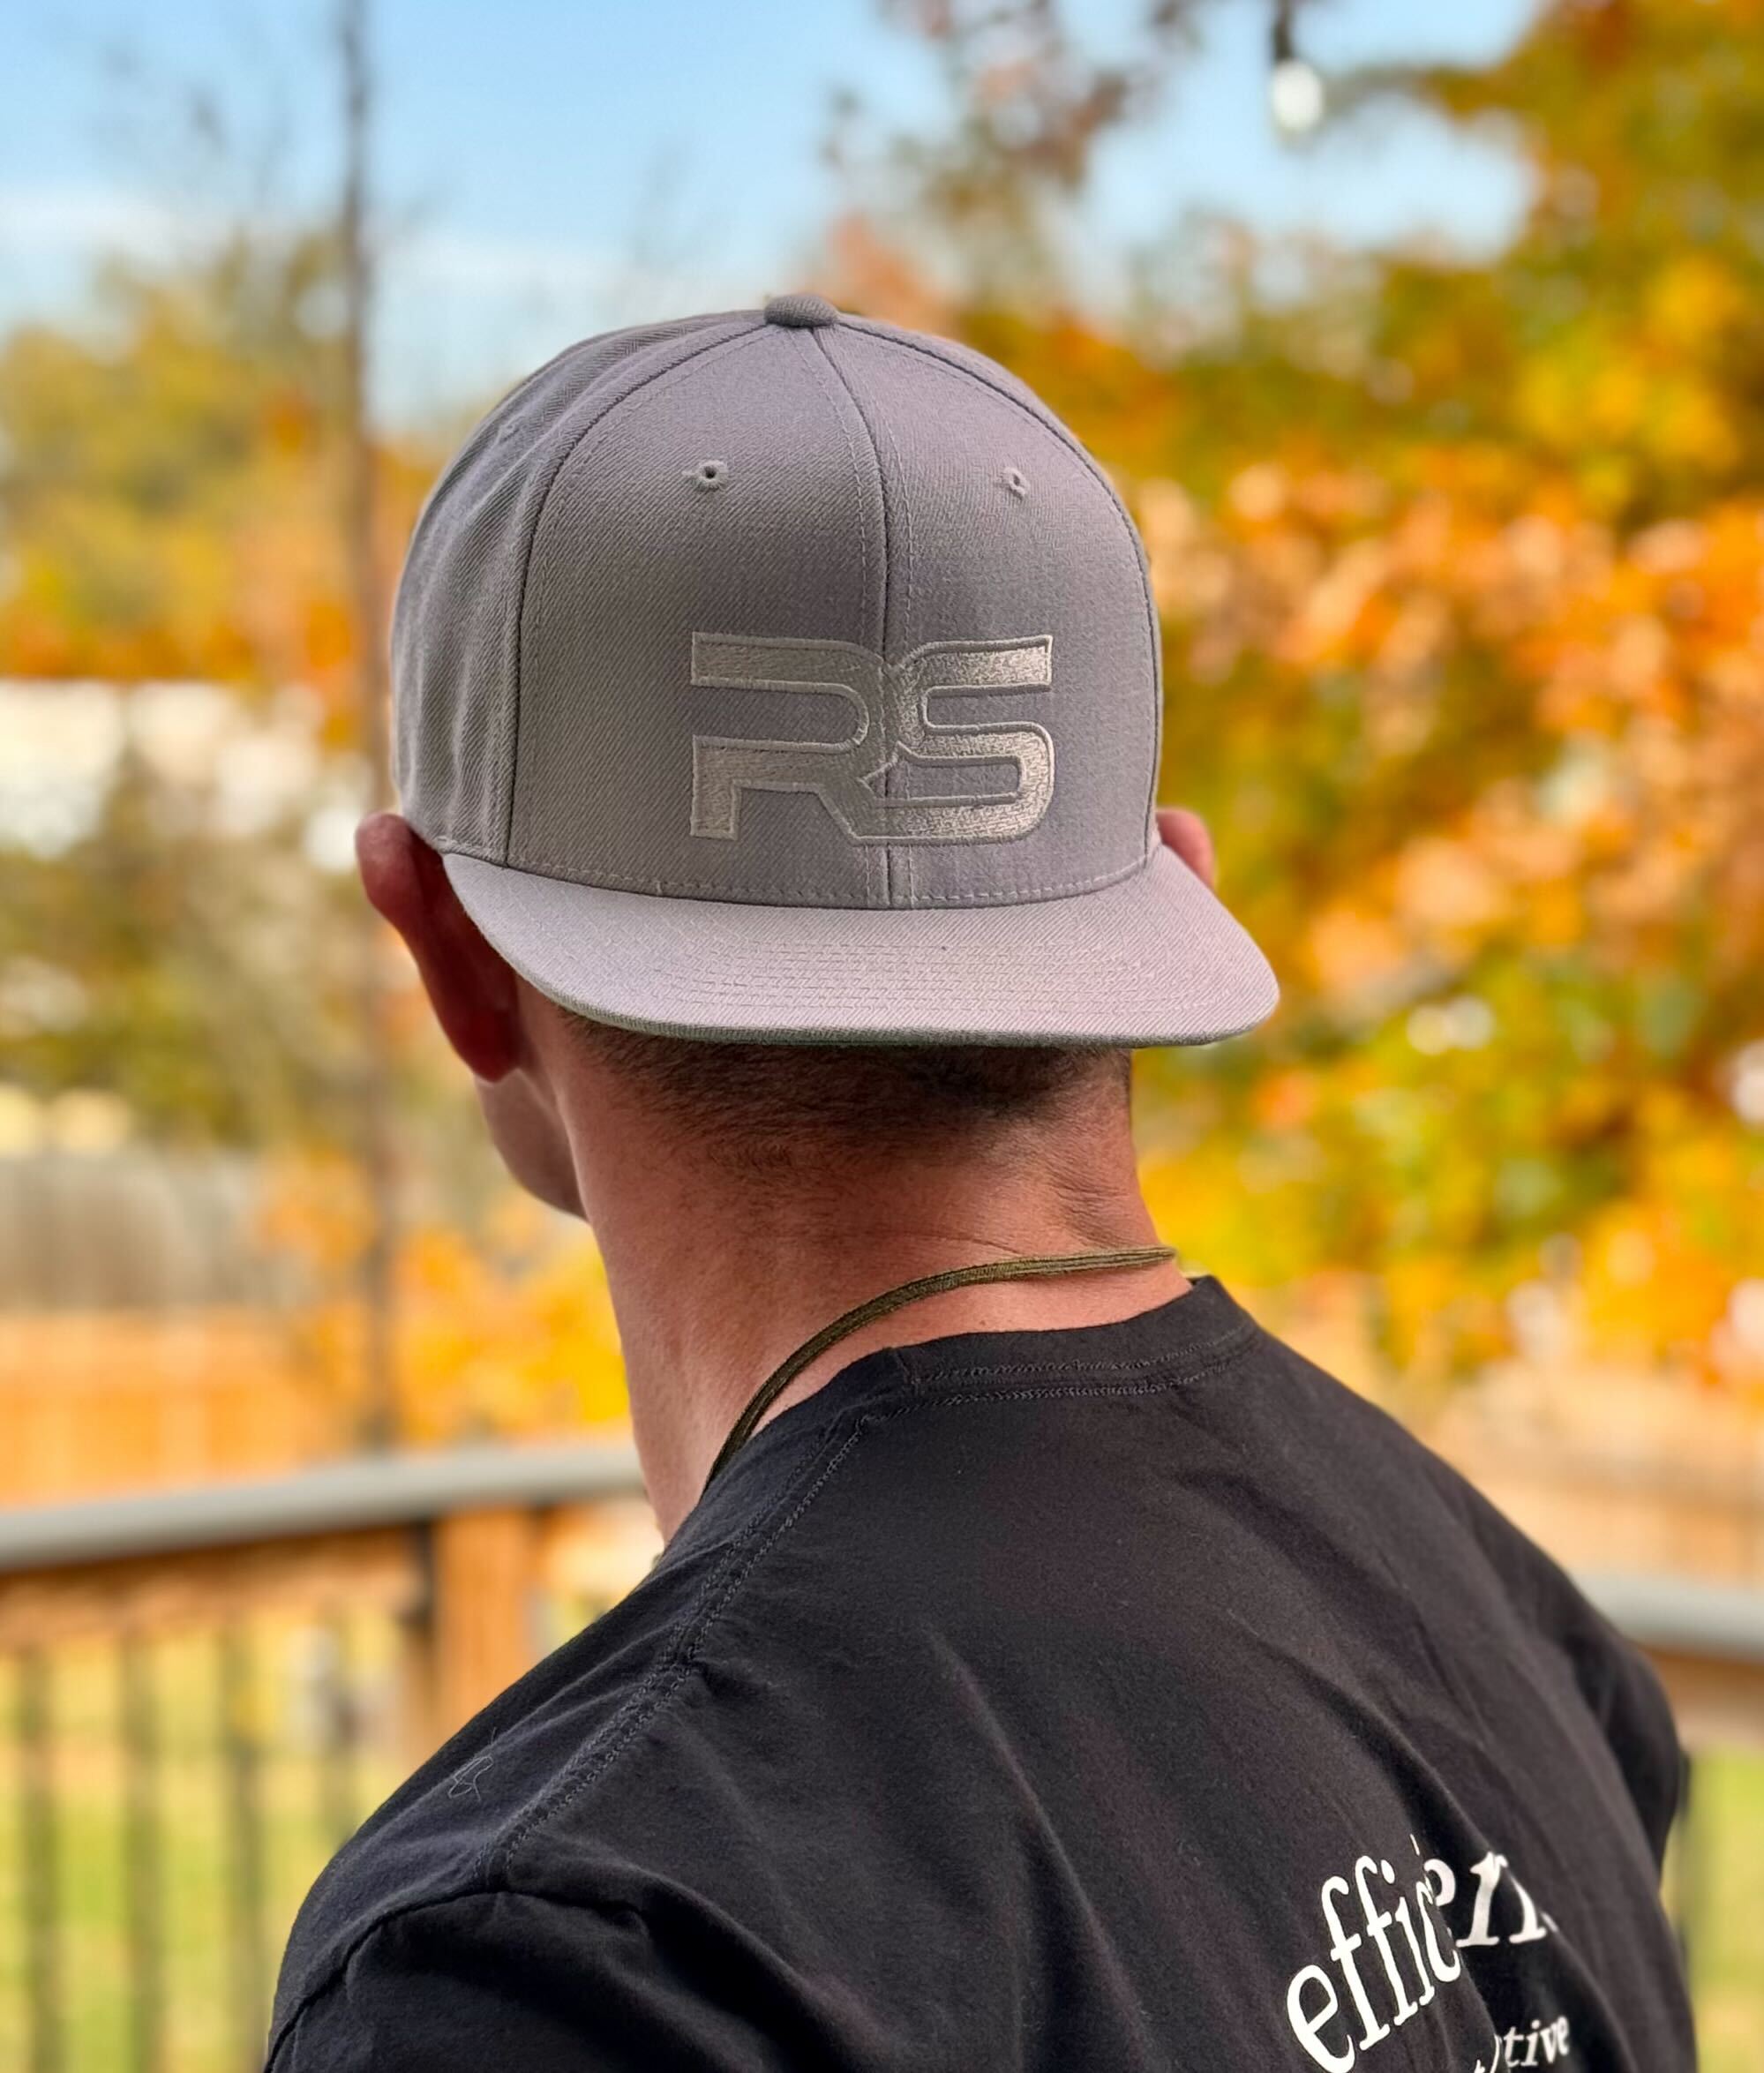 RS Logo (Emerald, Embroidered) - Hat (Black/Camo Bill, Flat Bill, Solid)